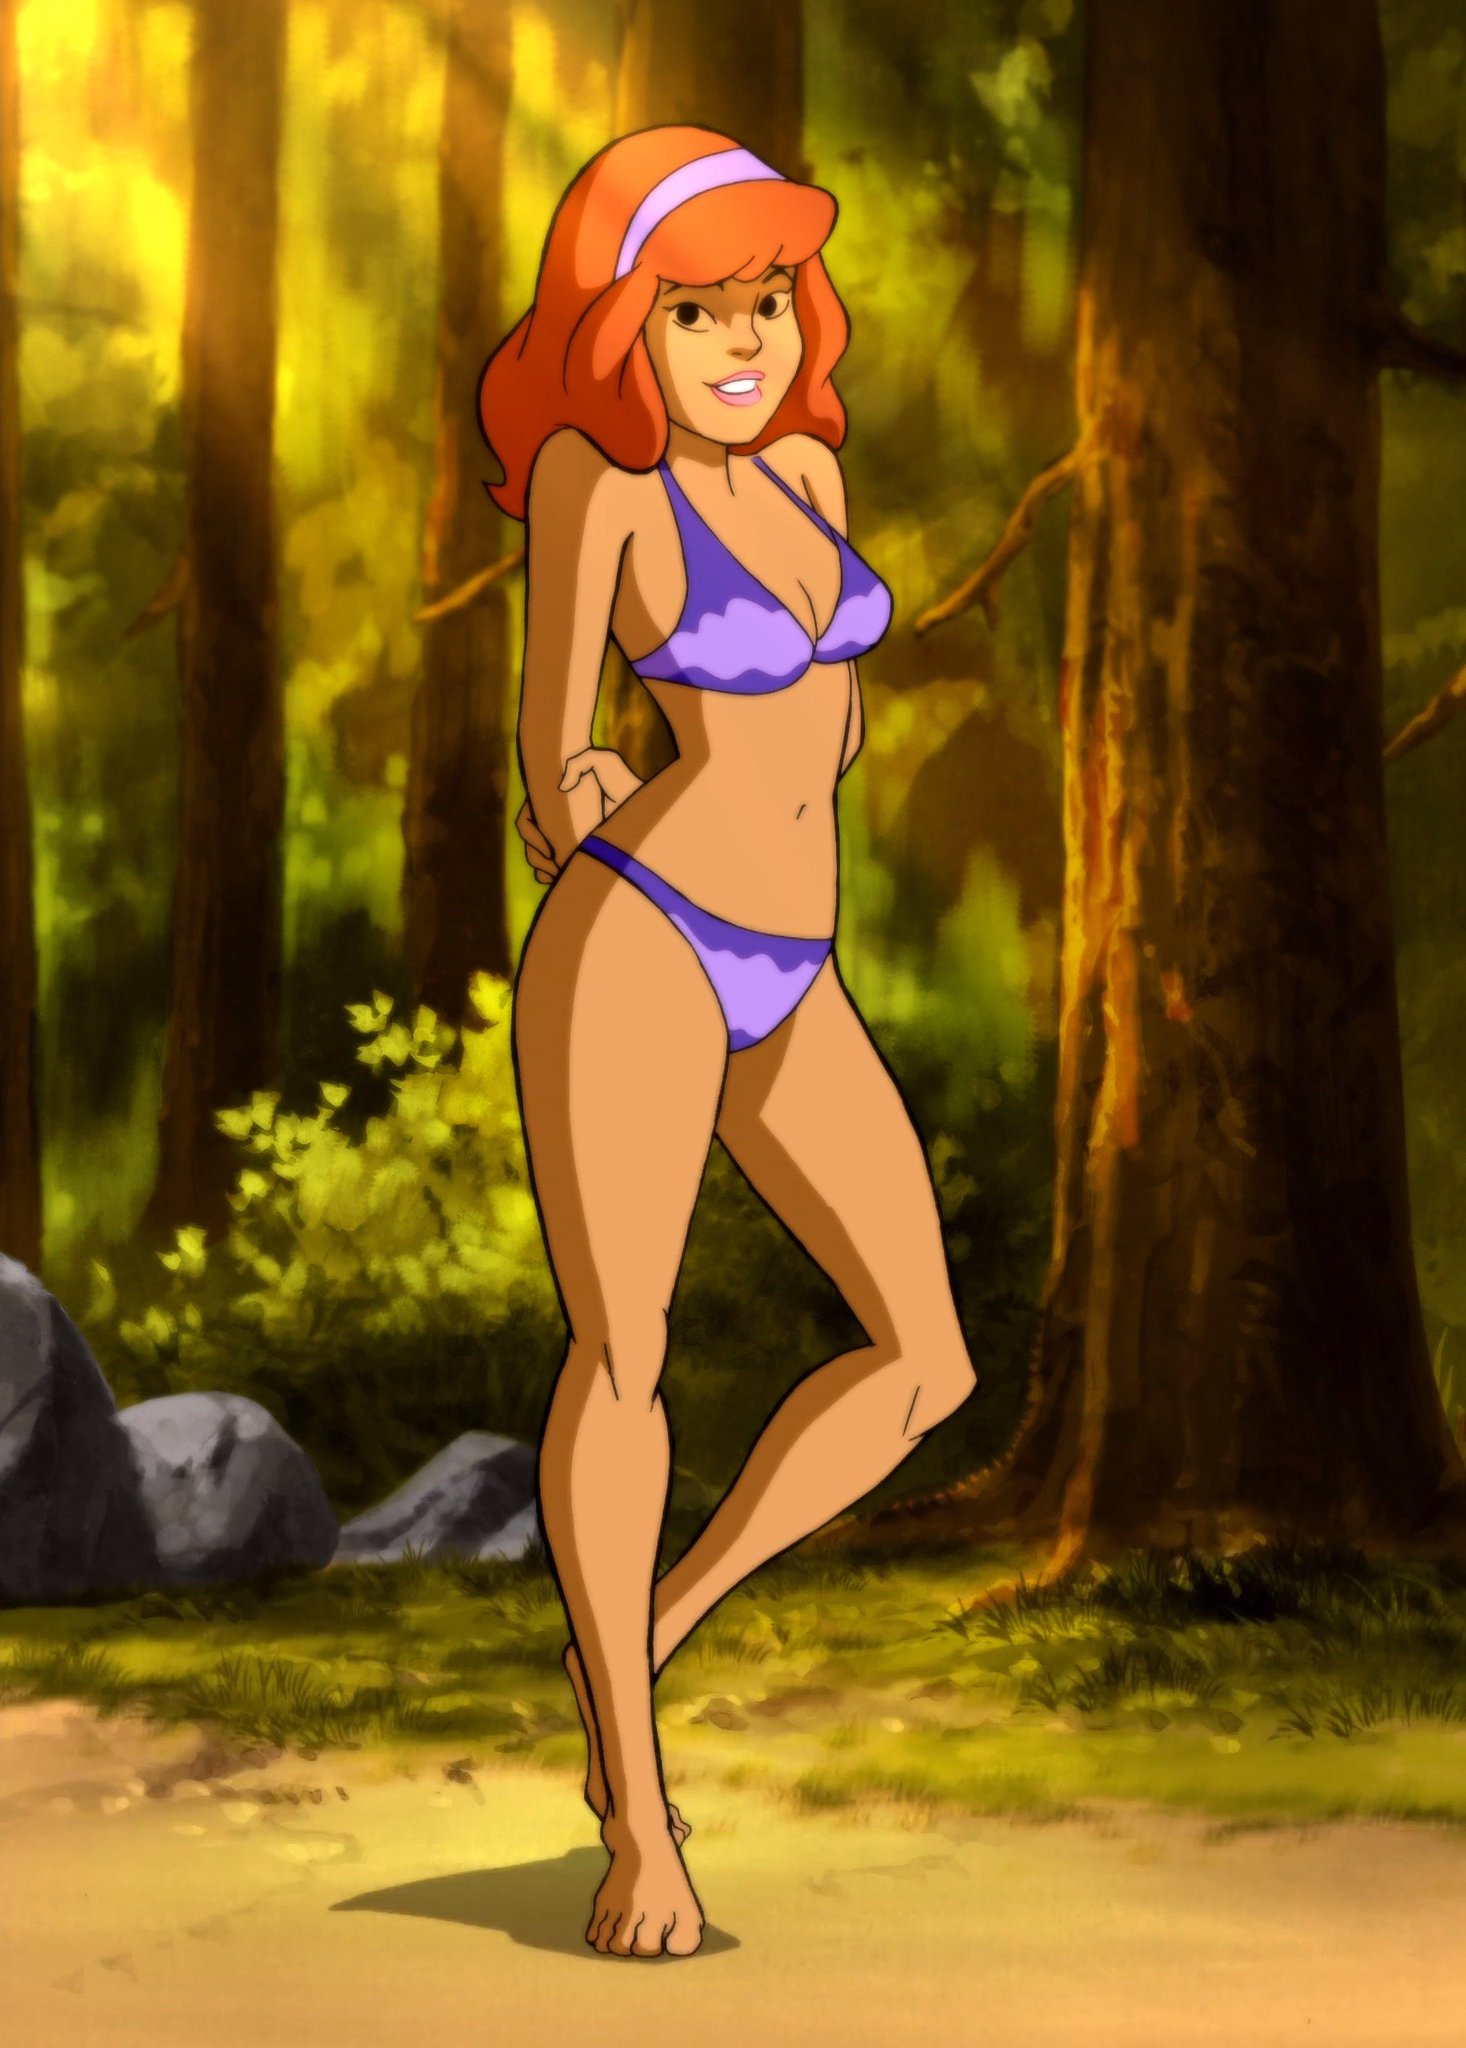 “Screenshots of Daphne Blake from Scooby-Doo! 